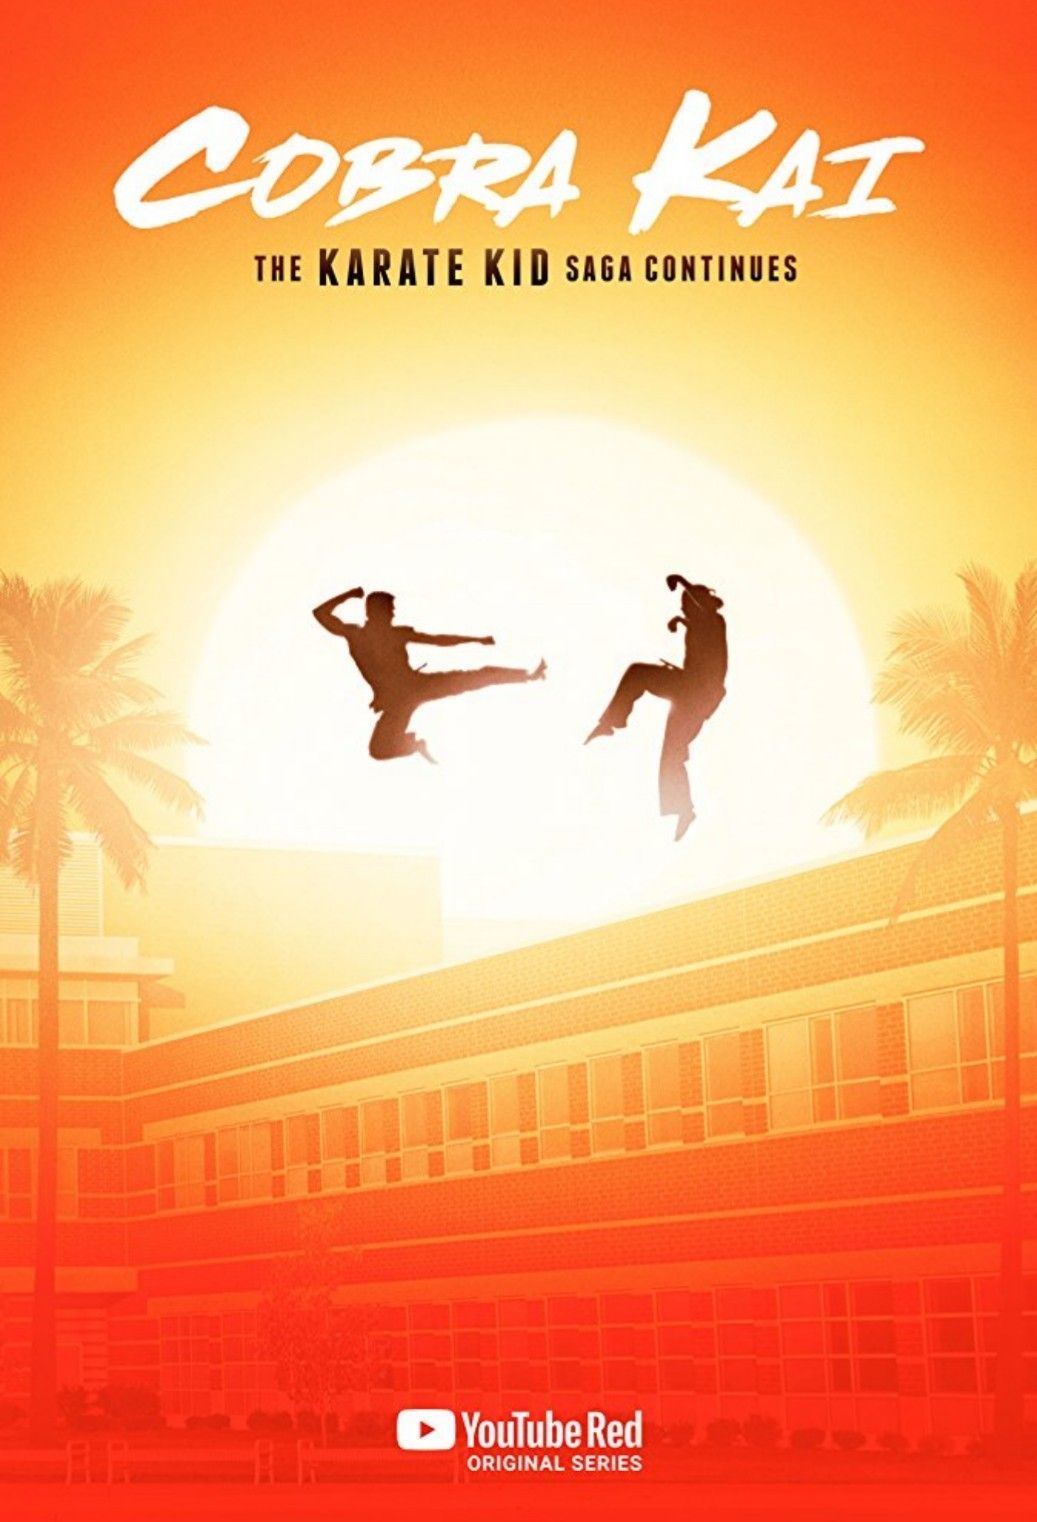 Cobra Kai #KarateKid #CobraKai. Karate kid movie, Karate kid, Cobra kai wallpaper